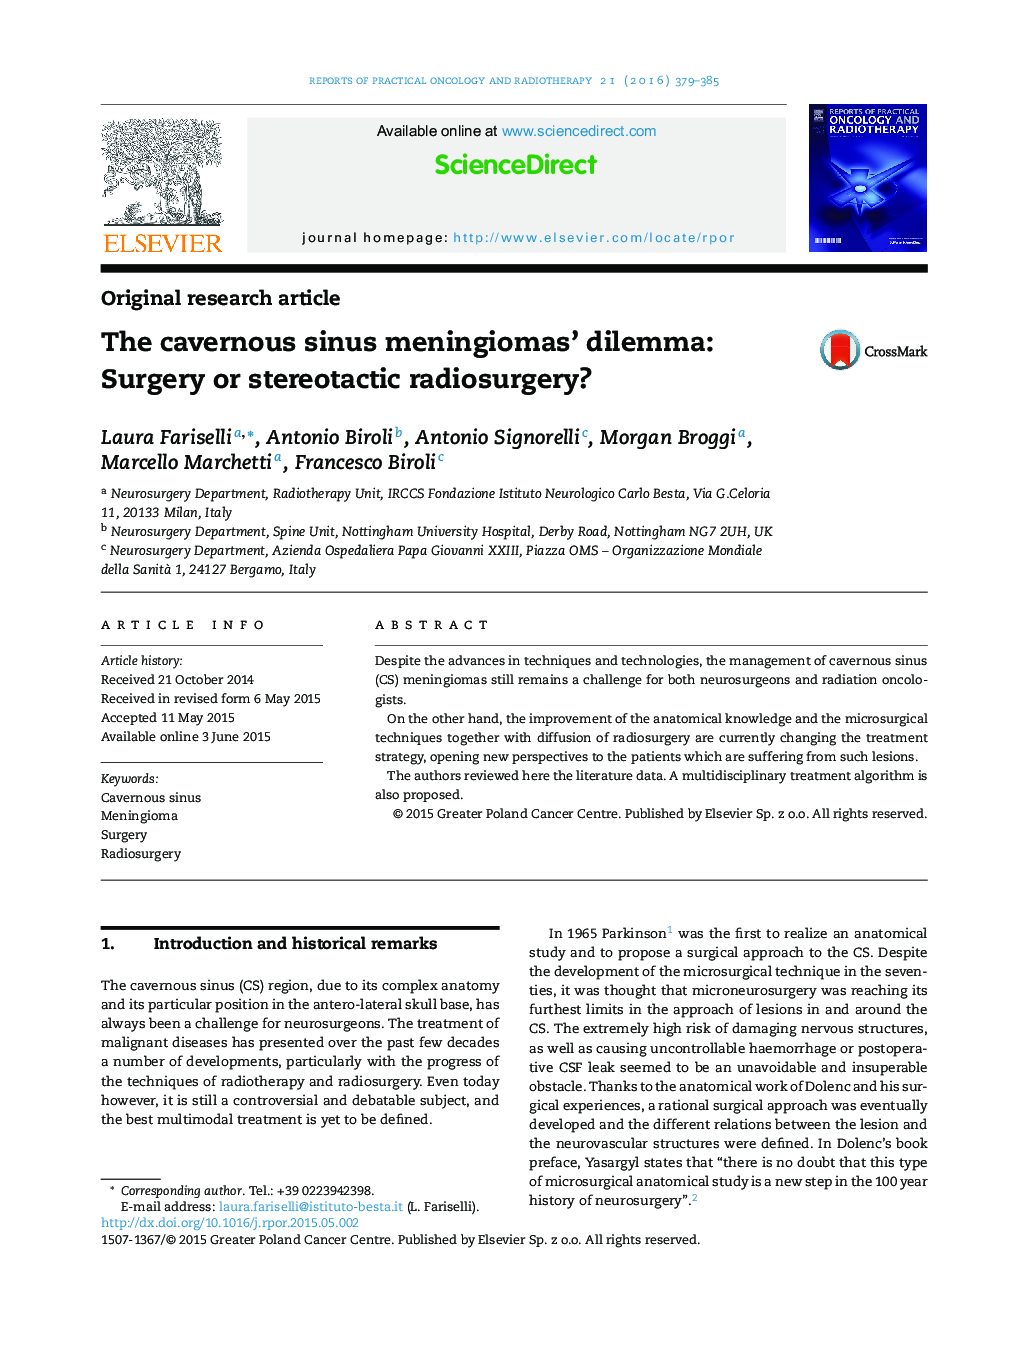 The cavernous sinus meningiomas’ dilemma: Surgery or stereotactic radiosurgery?